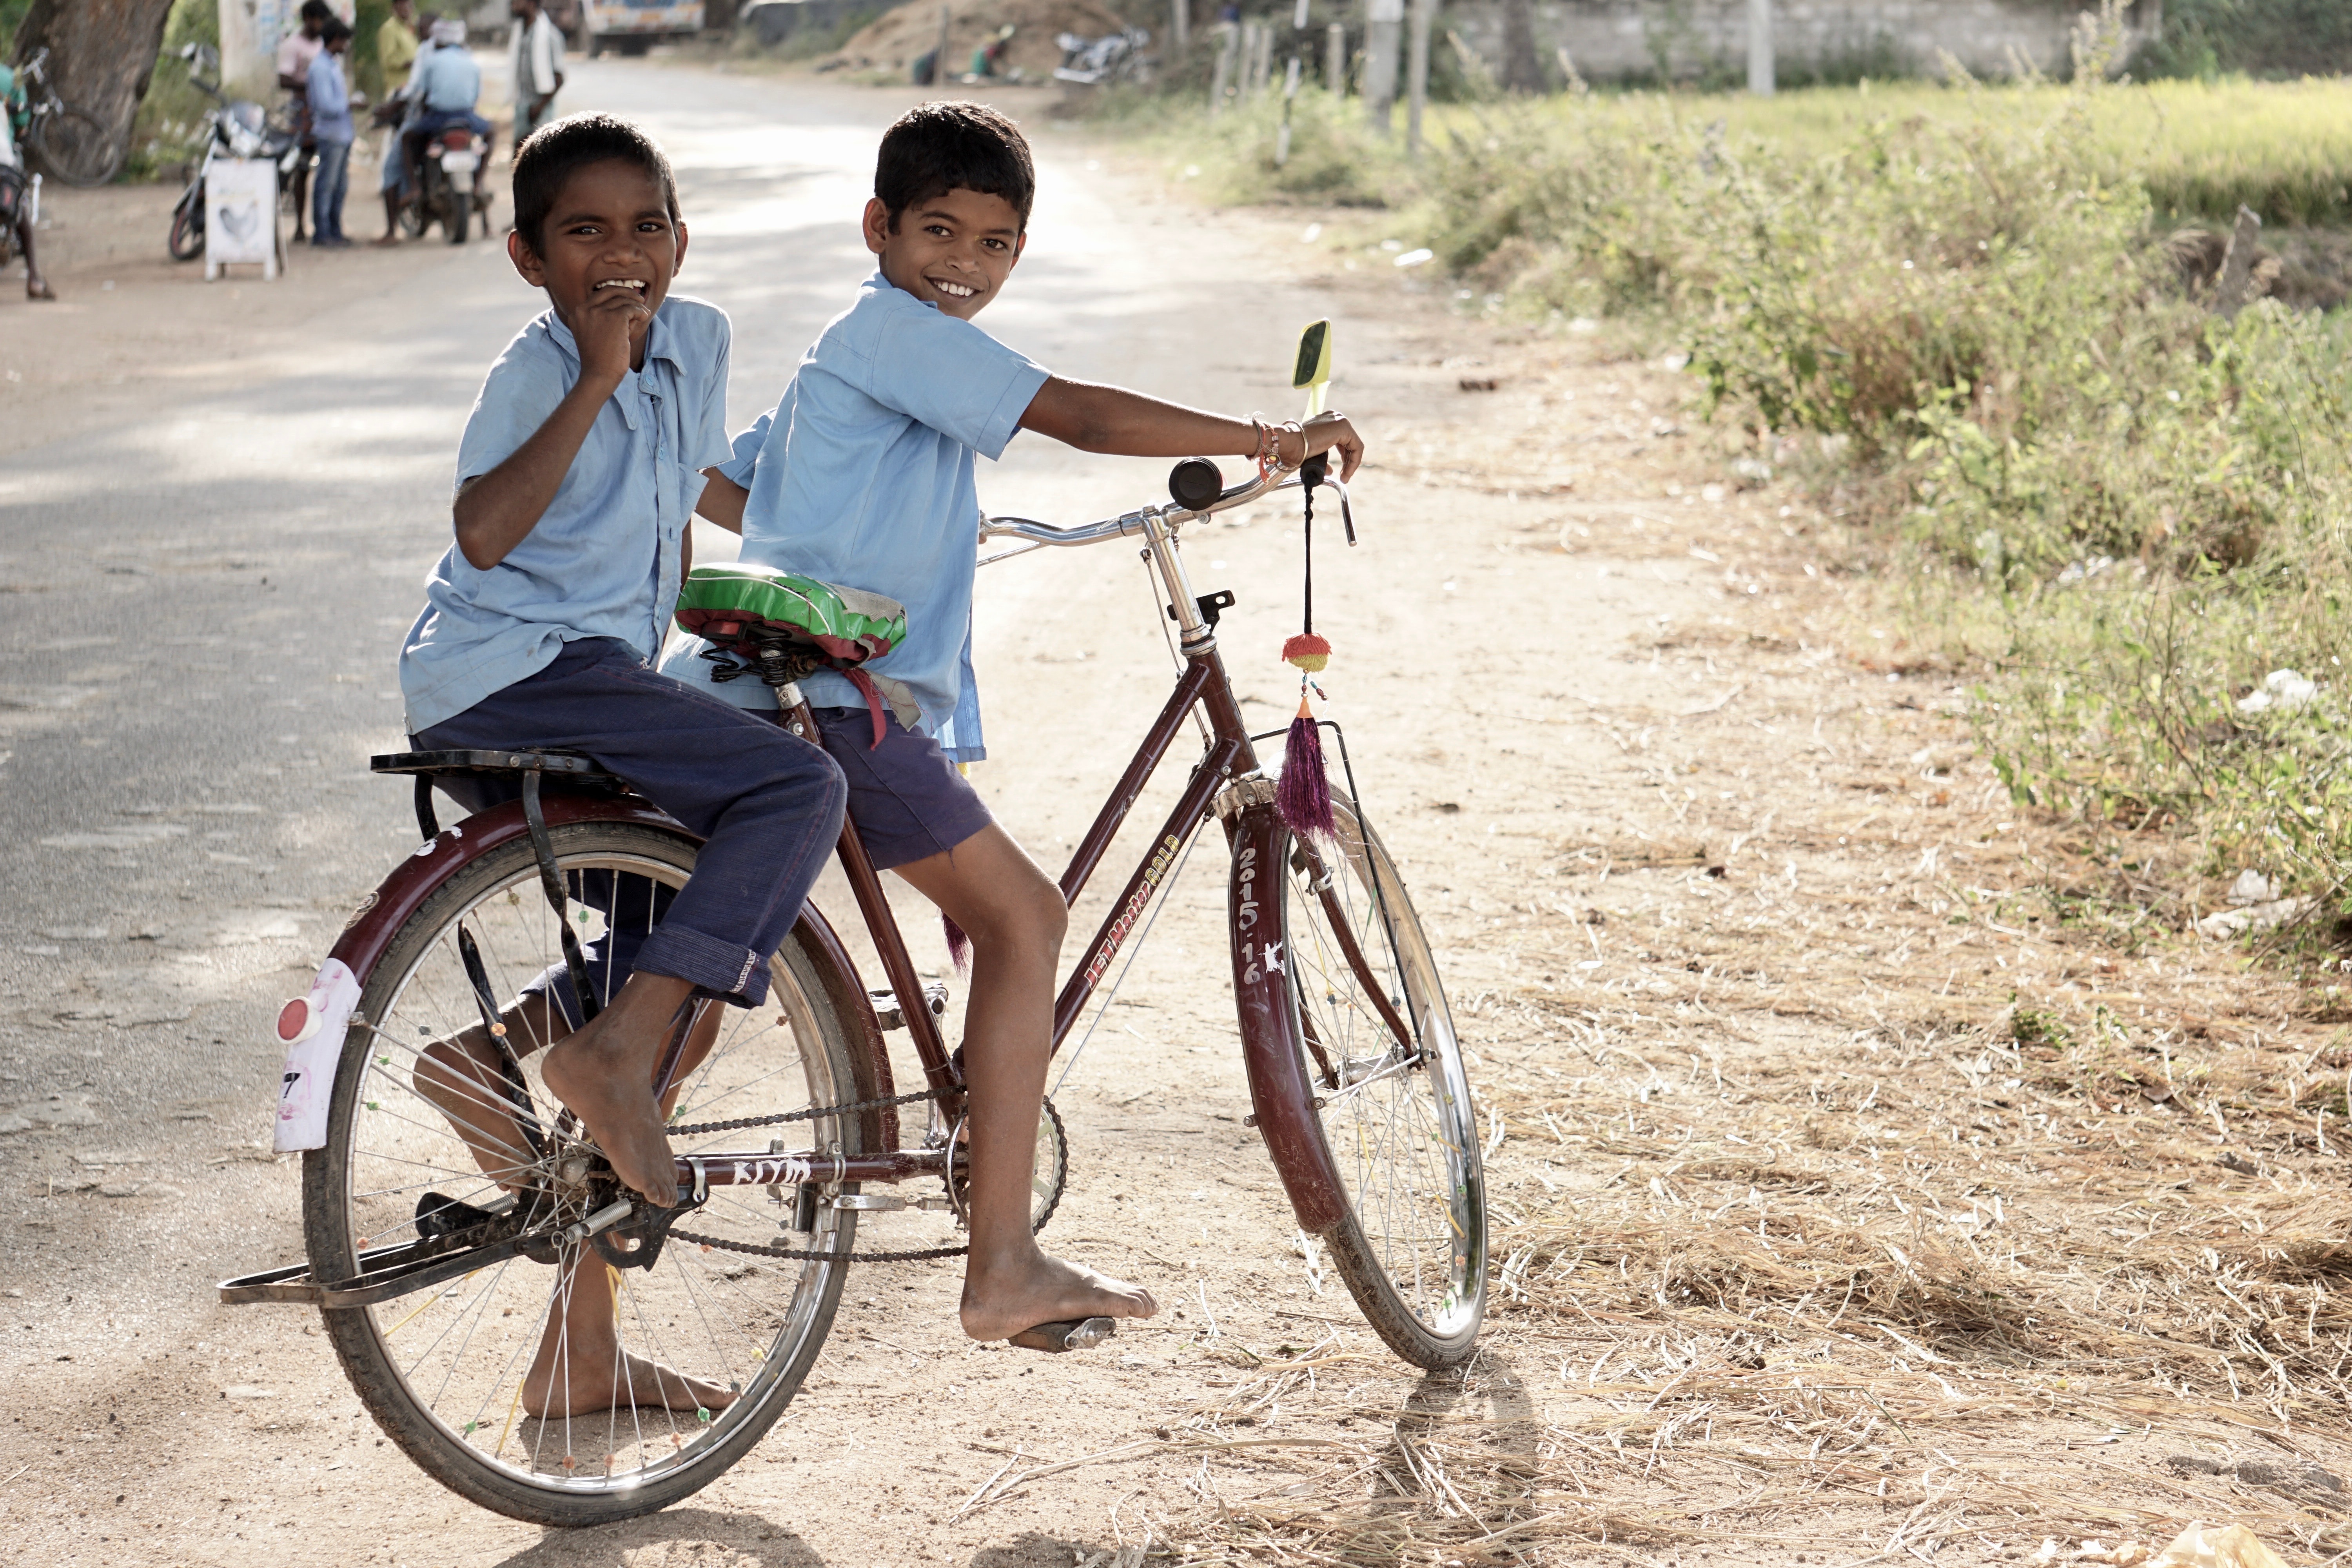 Two boys on a bike.